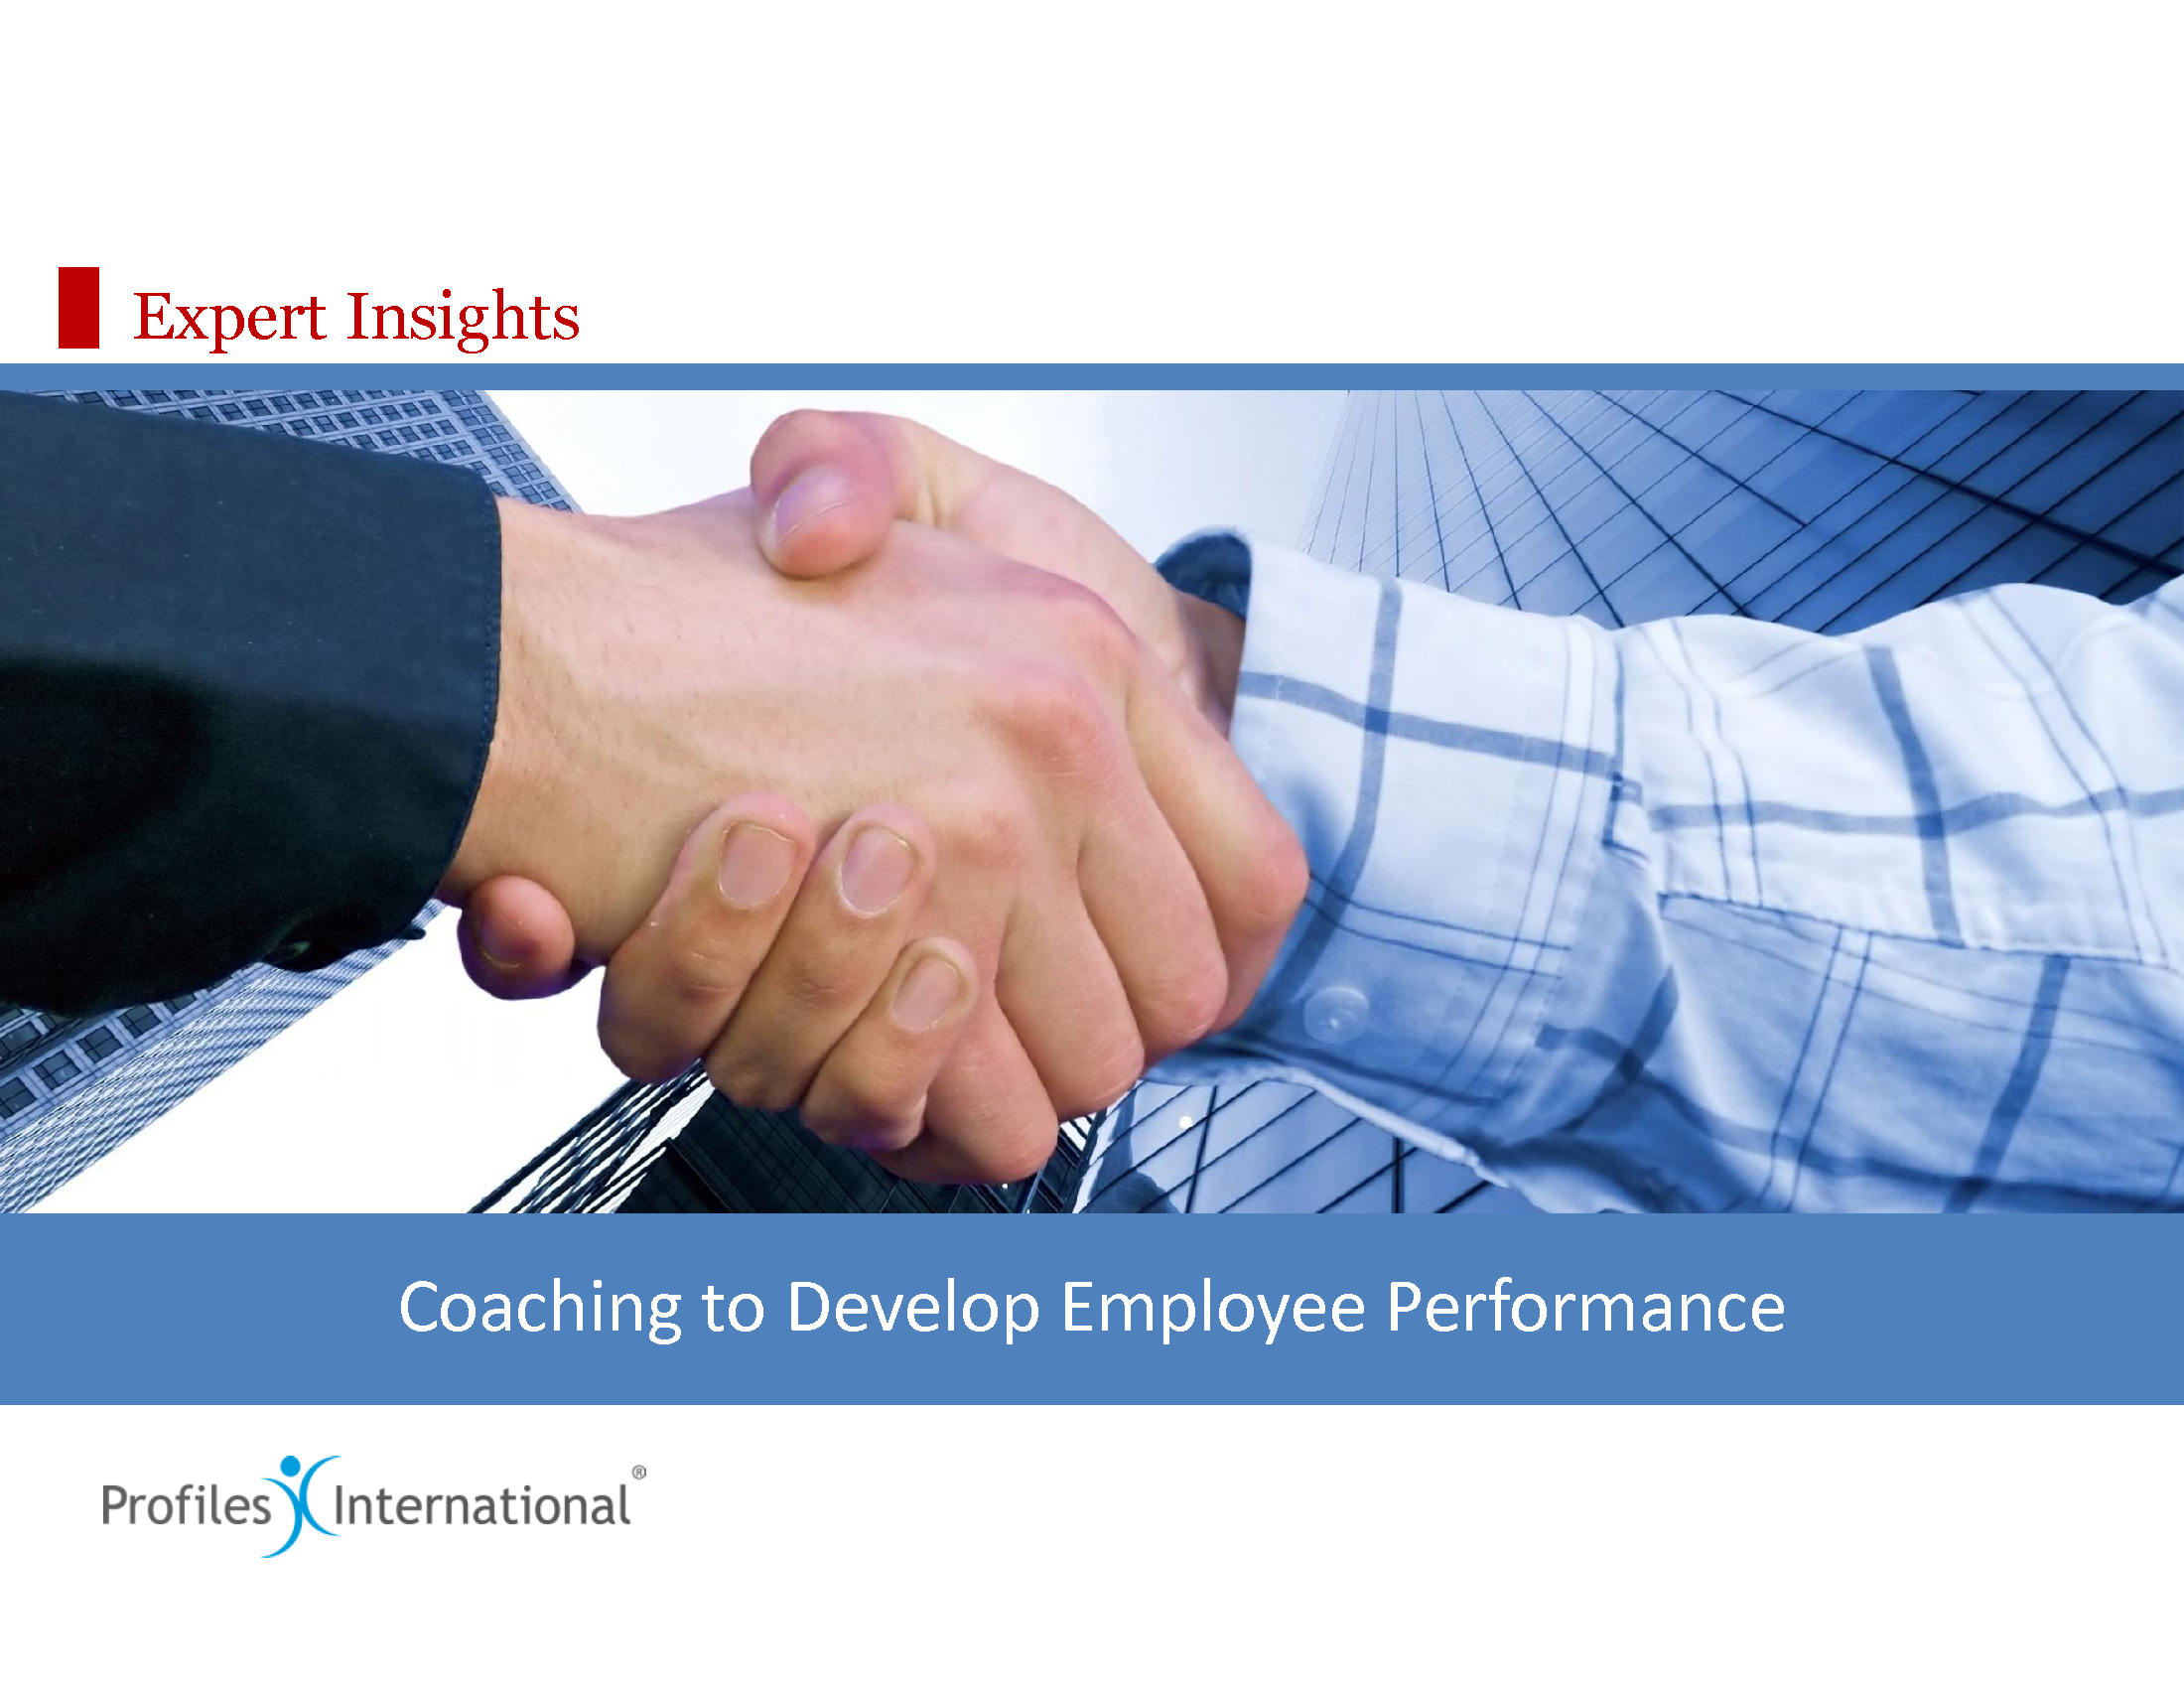 07-Coaching to Develop Employee Performance